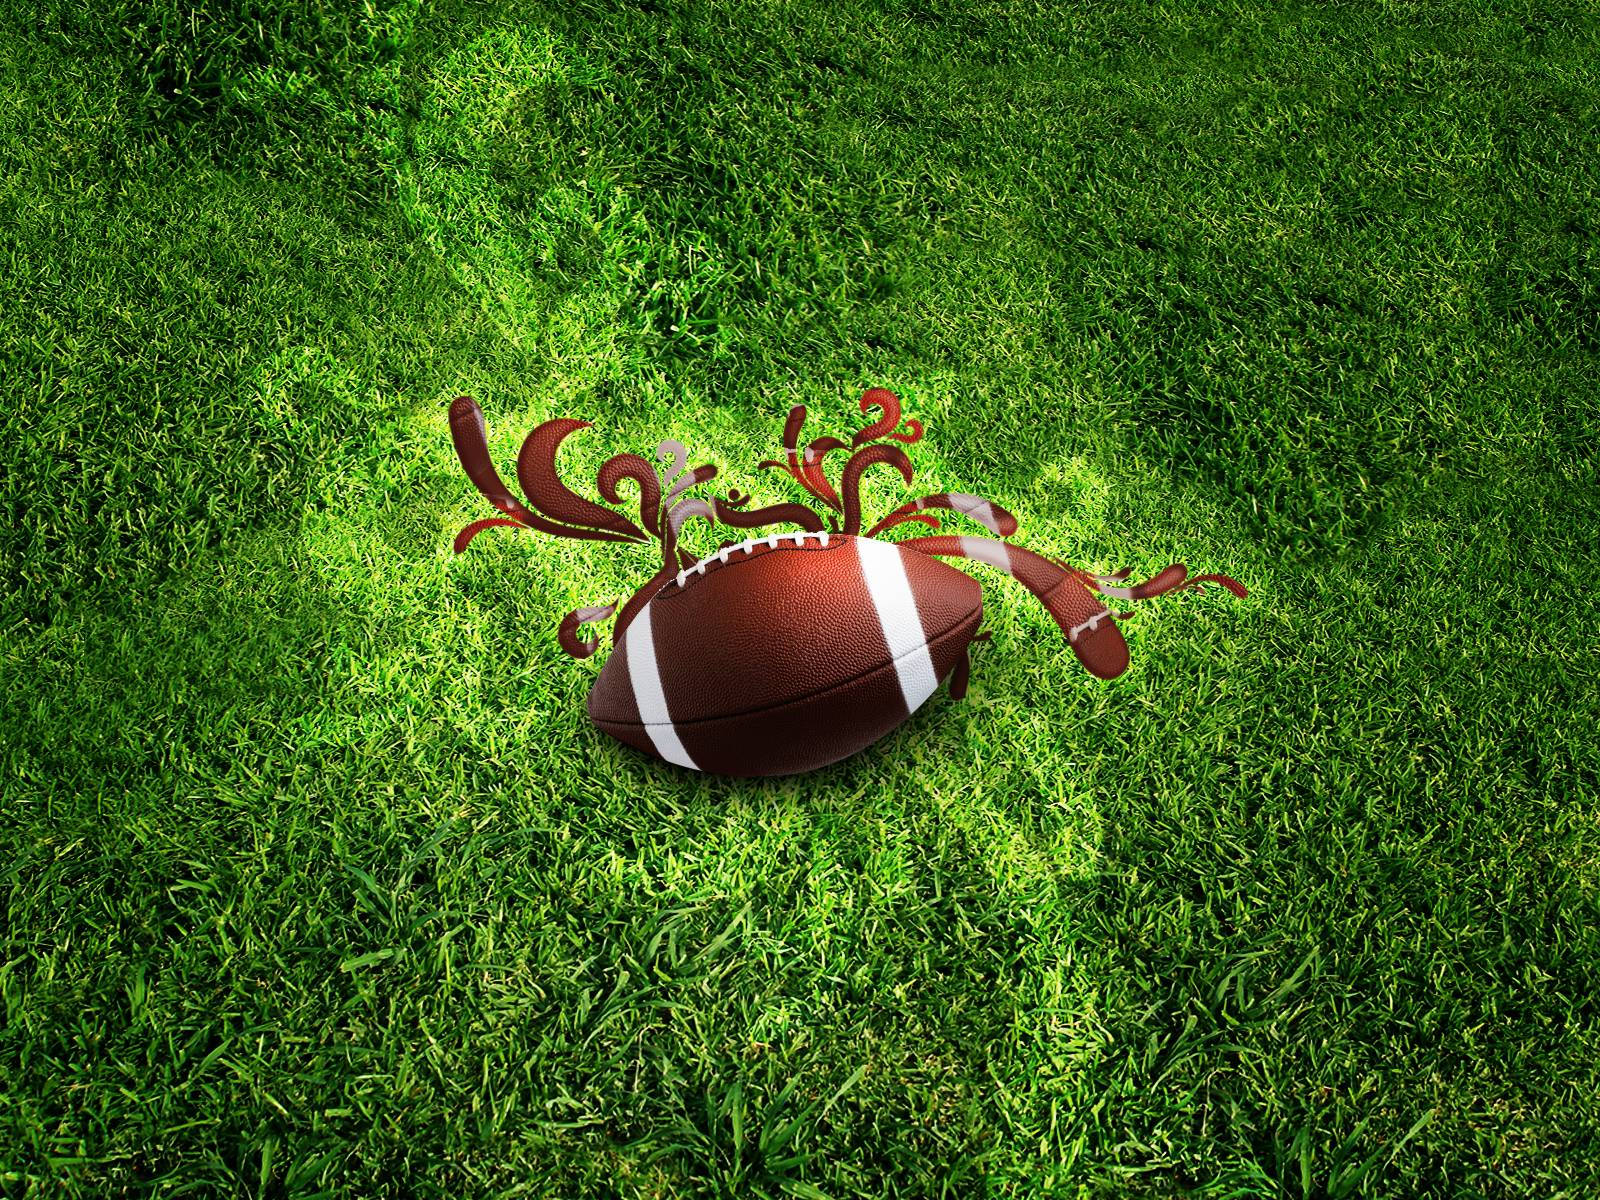 Cool Football Crab Design On Grass Wallpaper